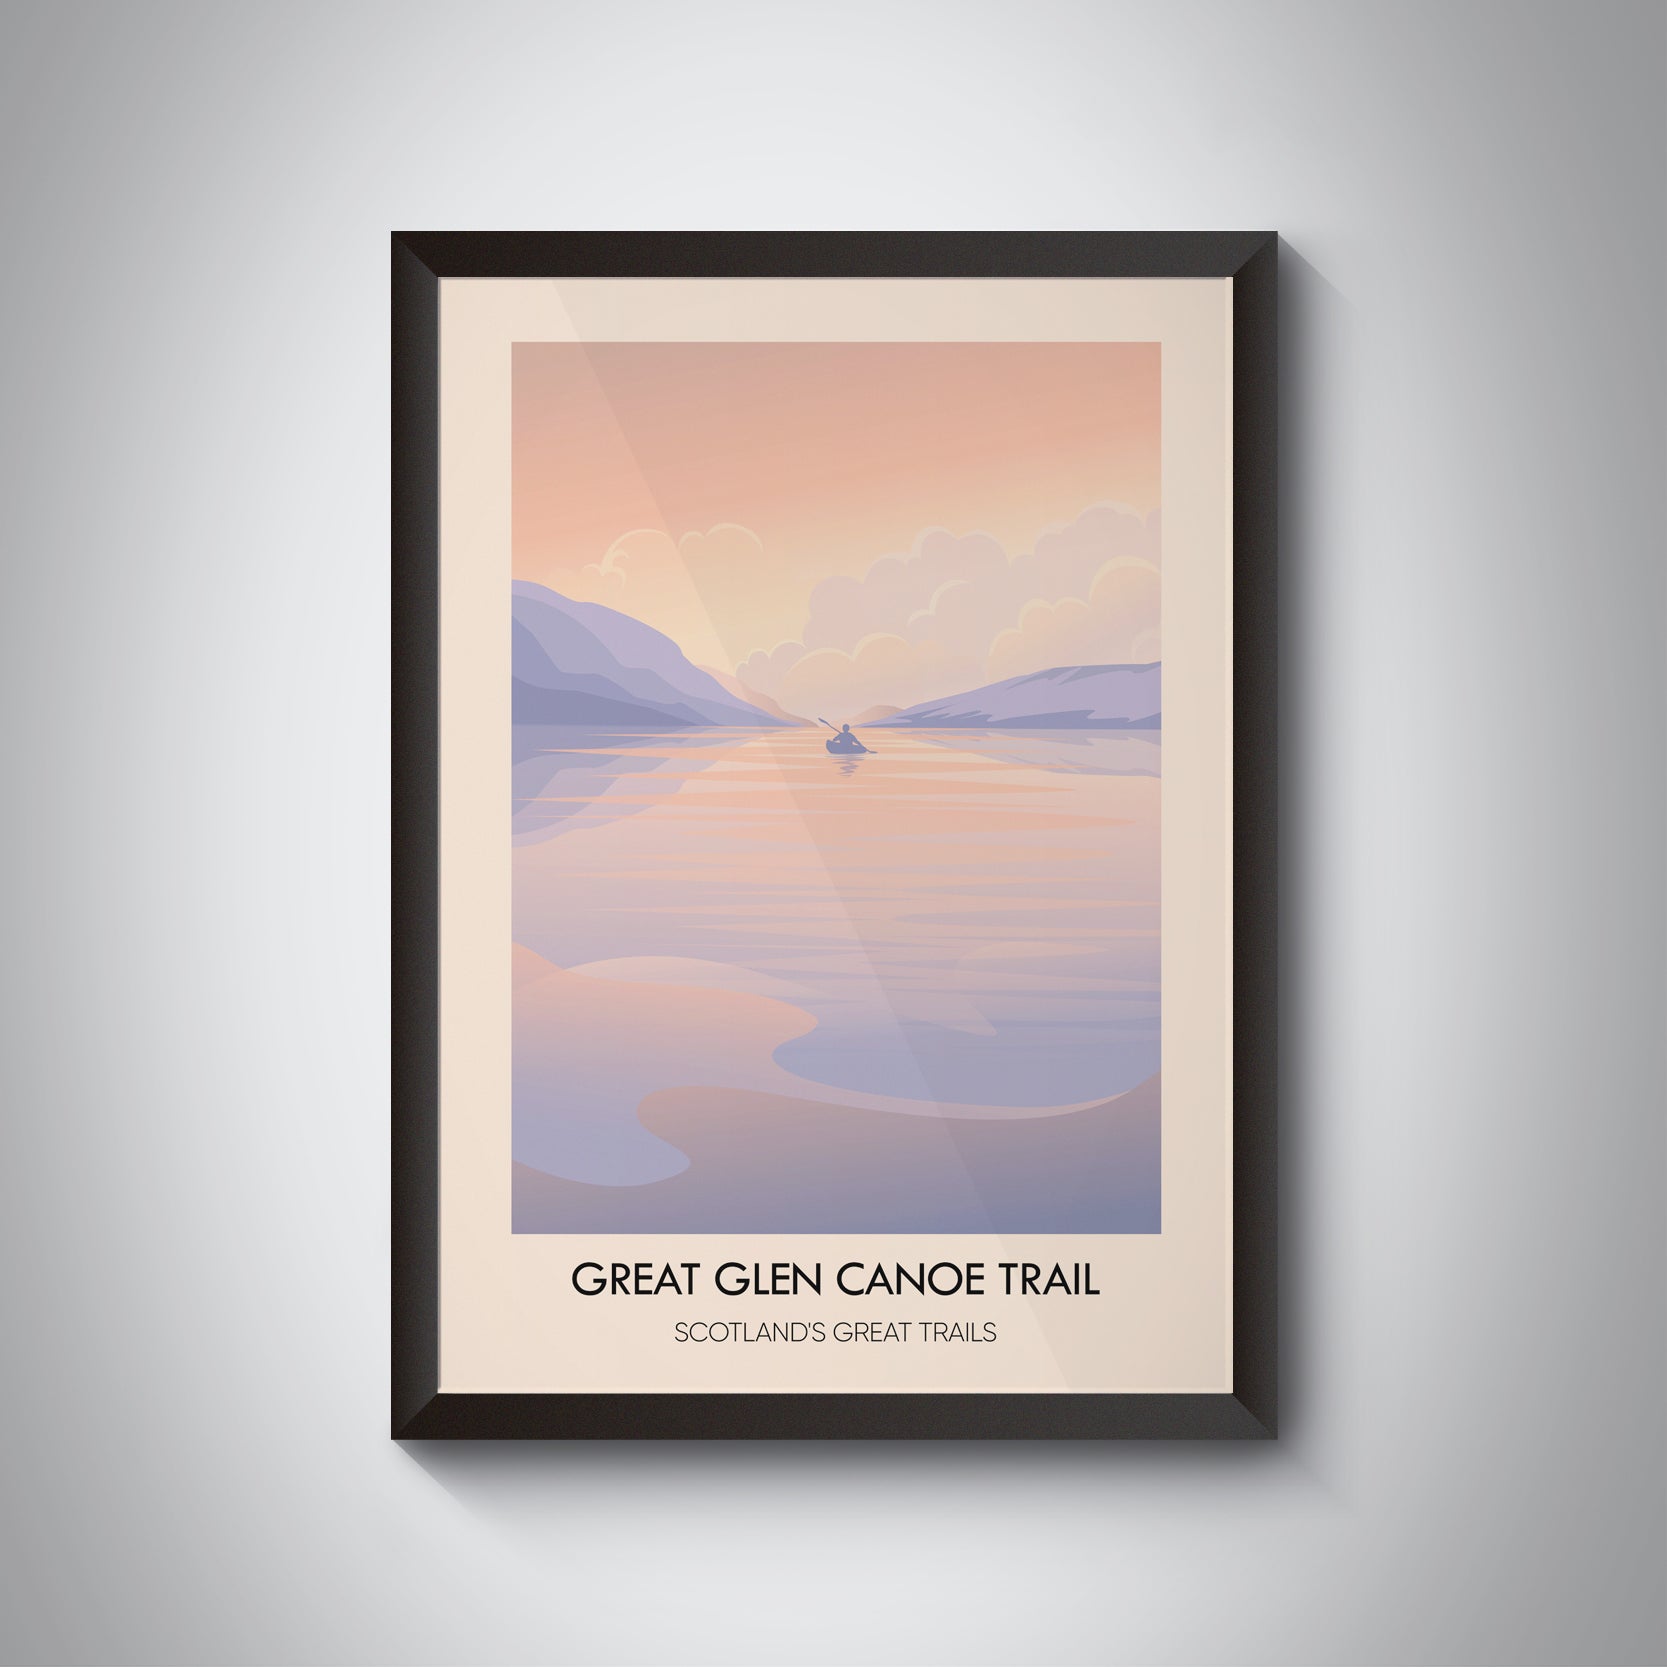 Great Glen Canoe Trail Scotland's Great Trails Poster